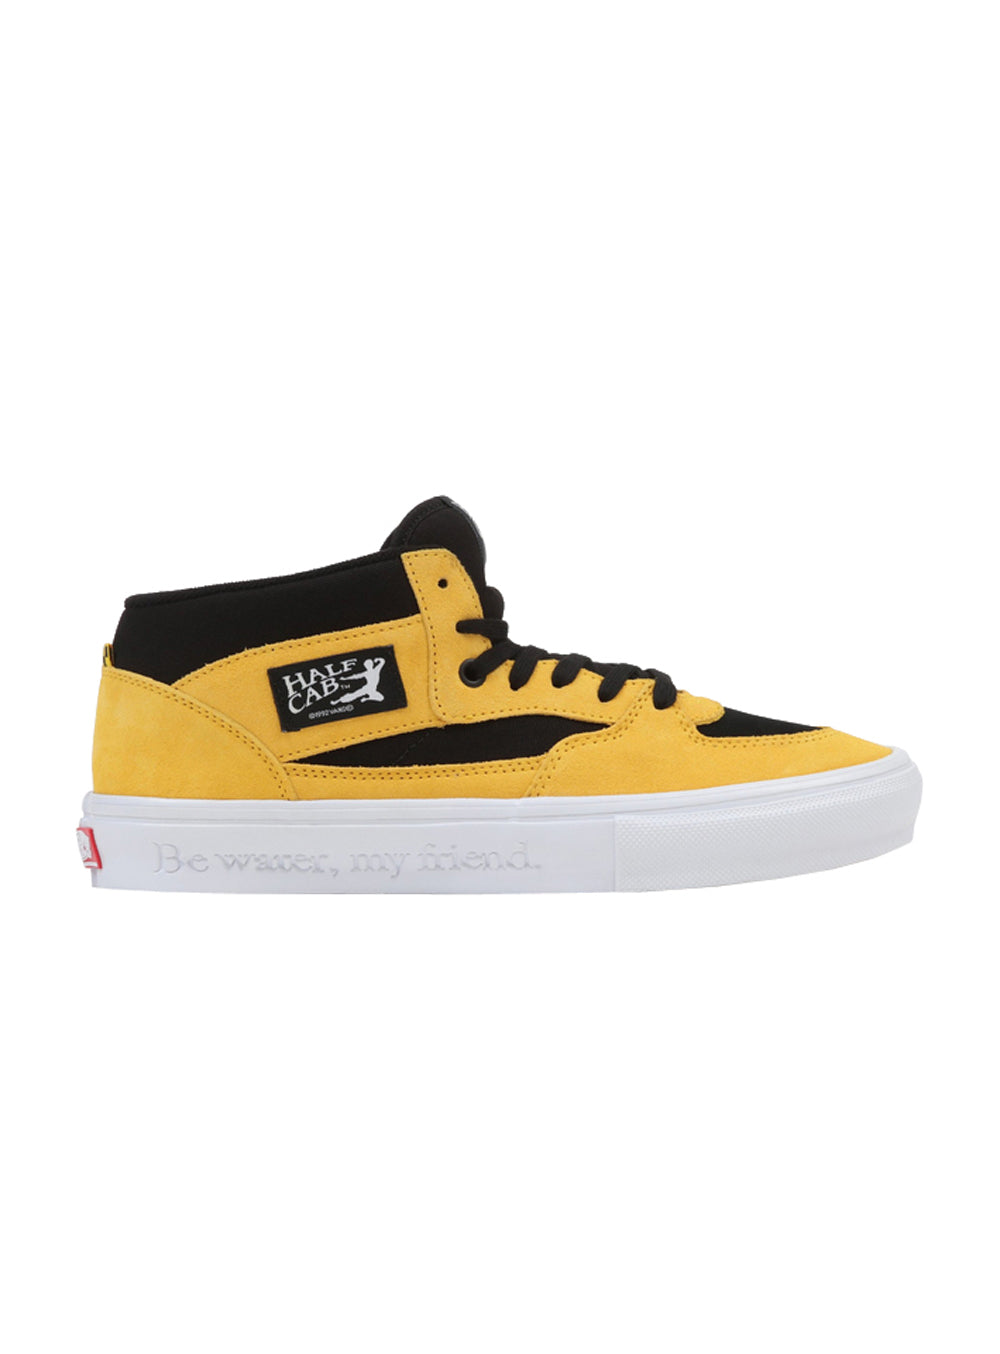 Vans Skate Half Cab Bruce Lee Black/Yellow 9